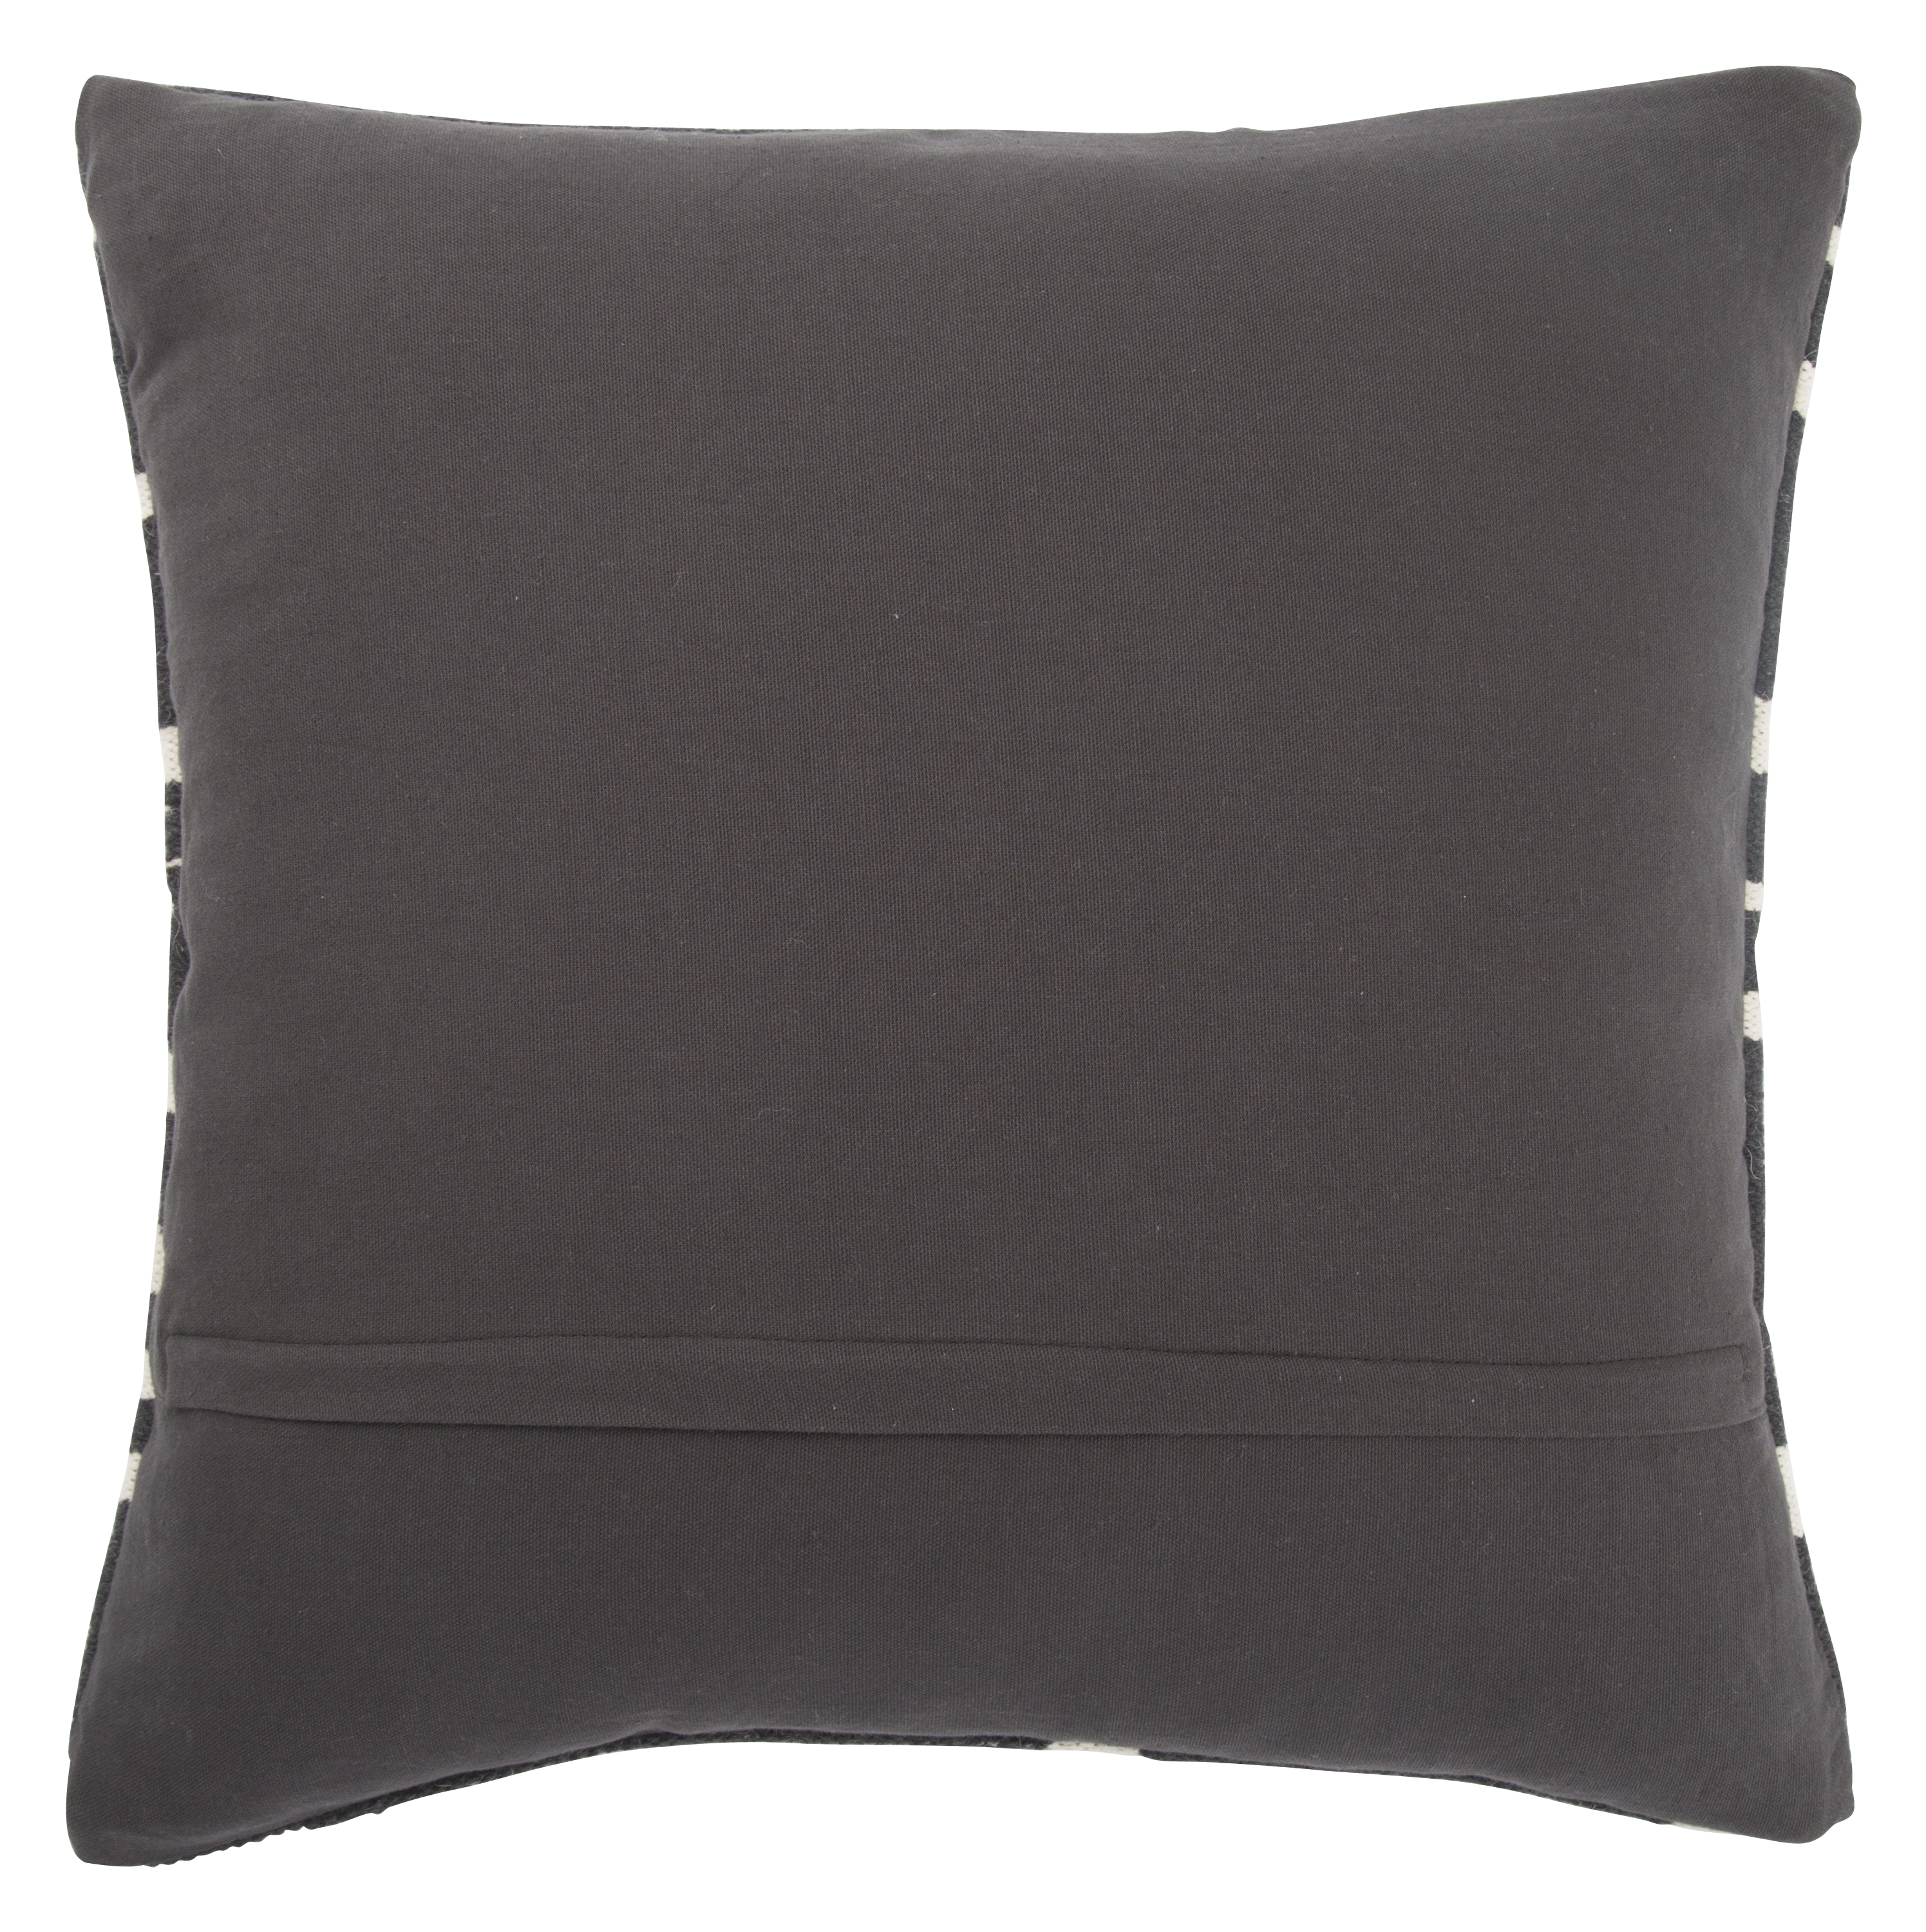 Design (US) Black 20"X20" Pillow - Image 1